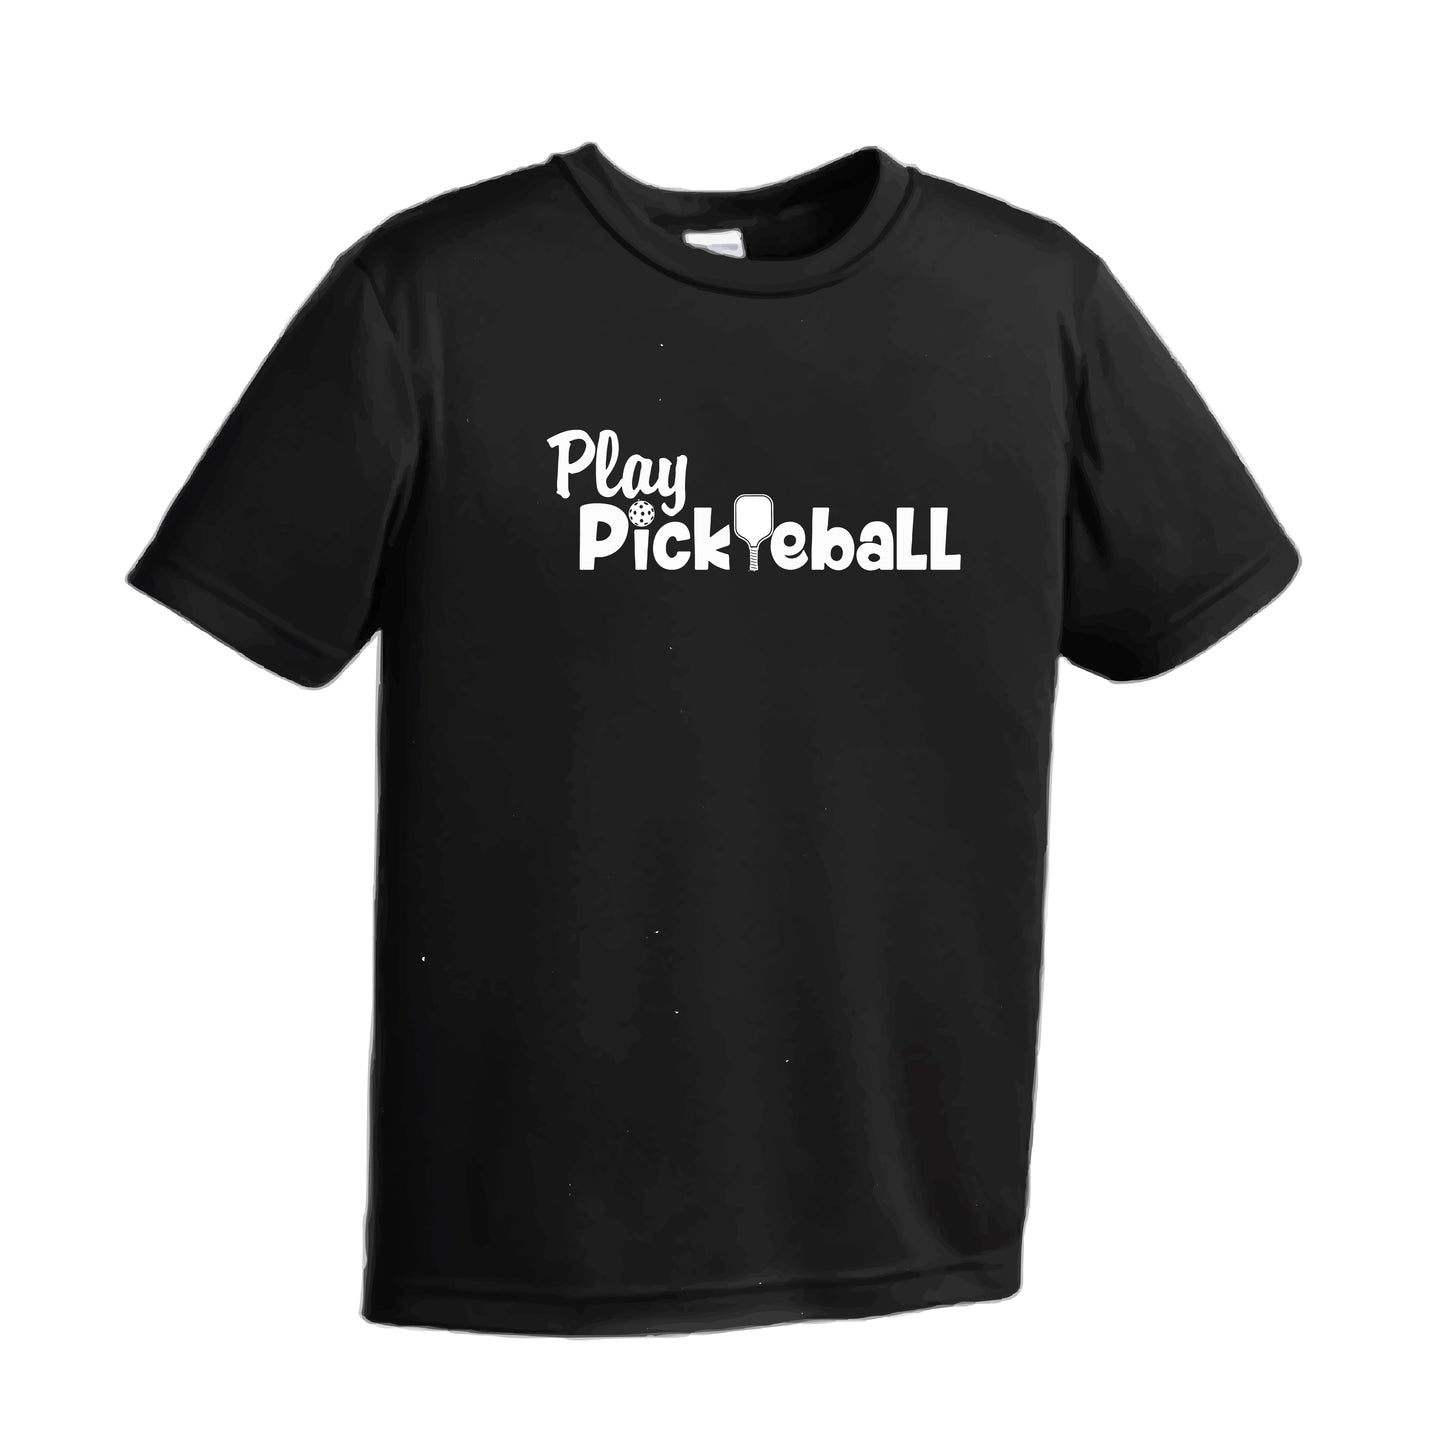 Play Pickleball | Youth Short Sleeve Athletic Pickleball Shirt | 100% Polyester